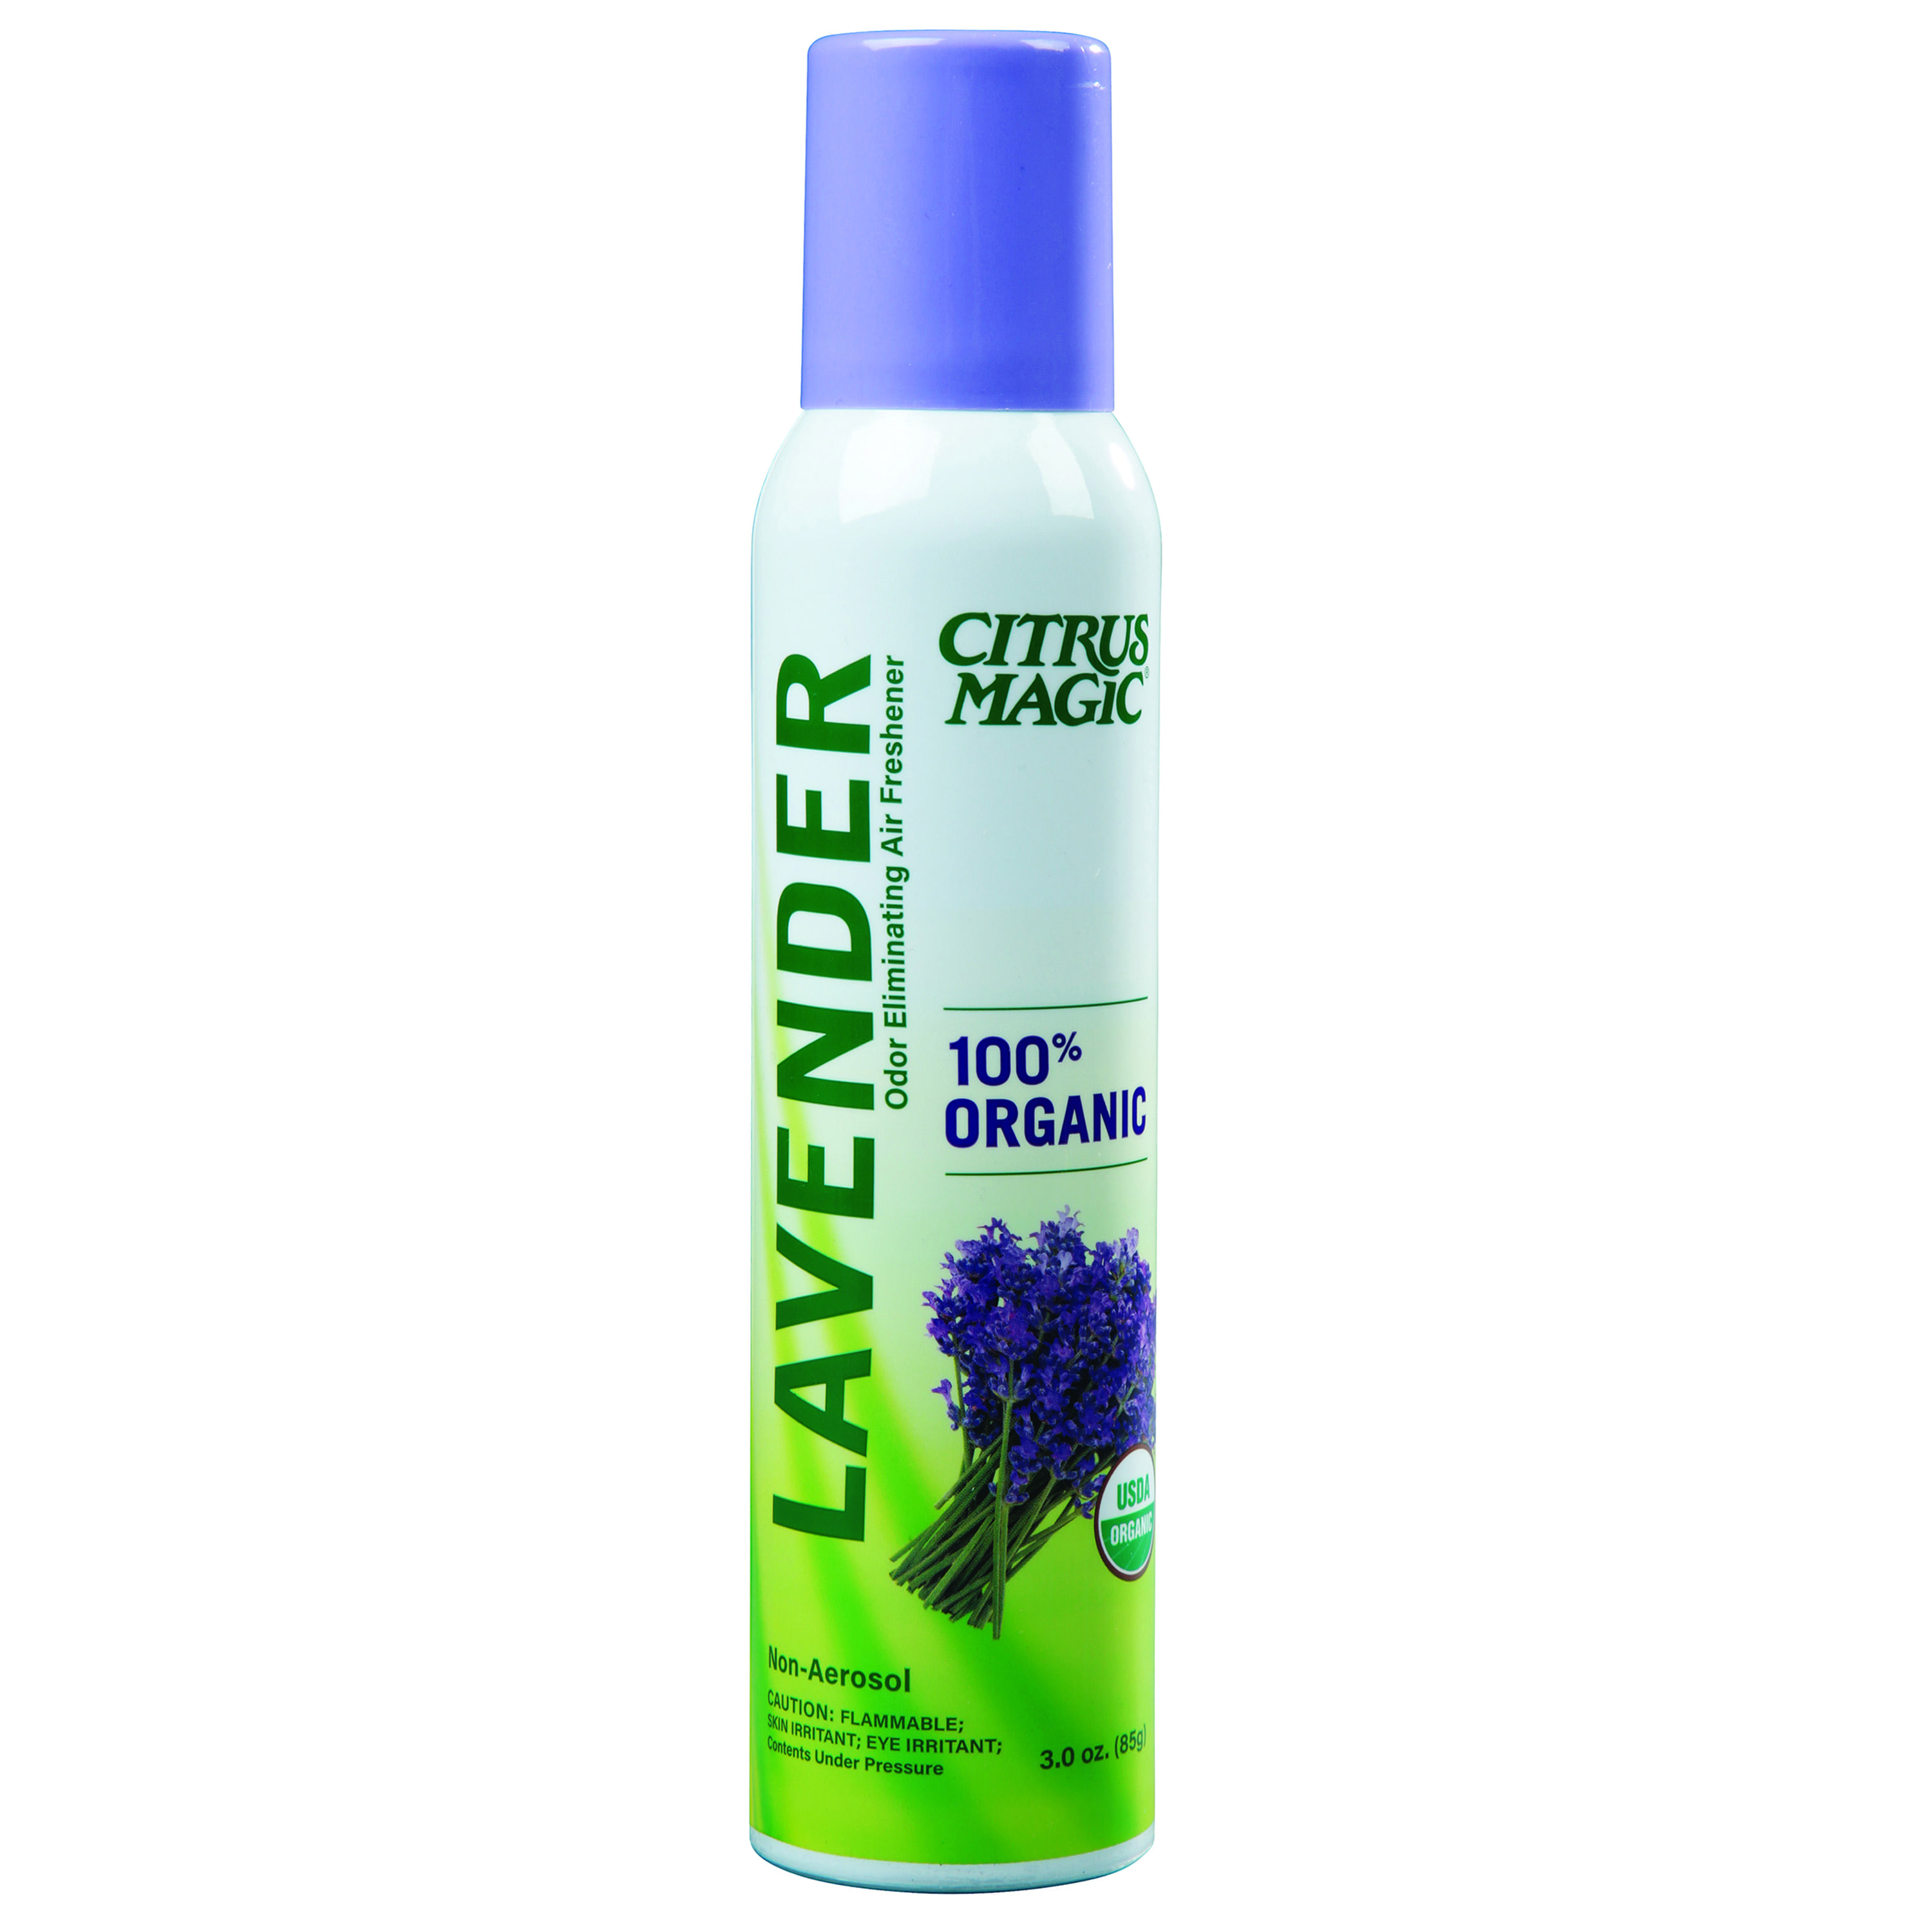 Citrus Magic Organic Natural Odor Eliminating Air Freshener Spray, Lavender Eucalyptus